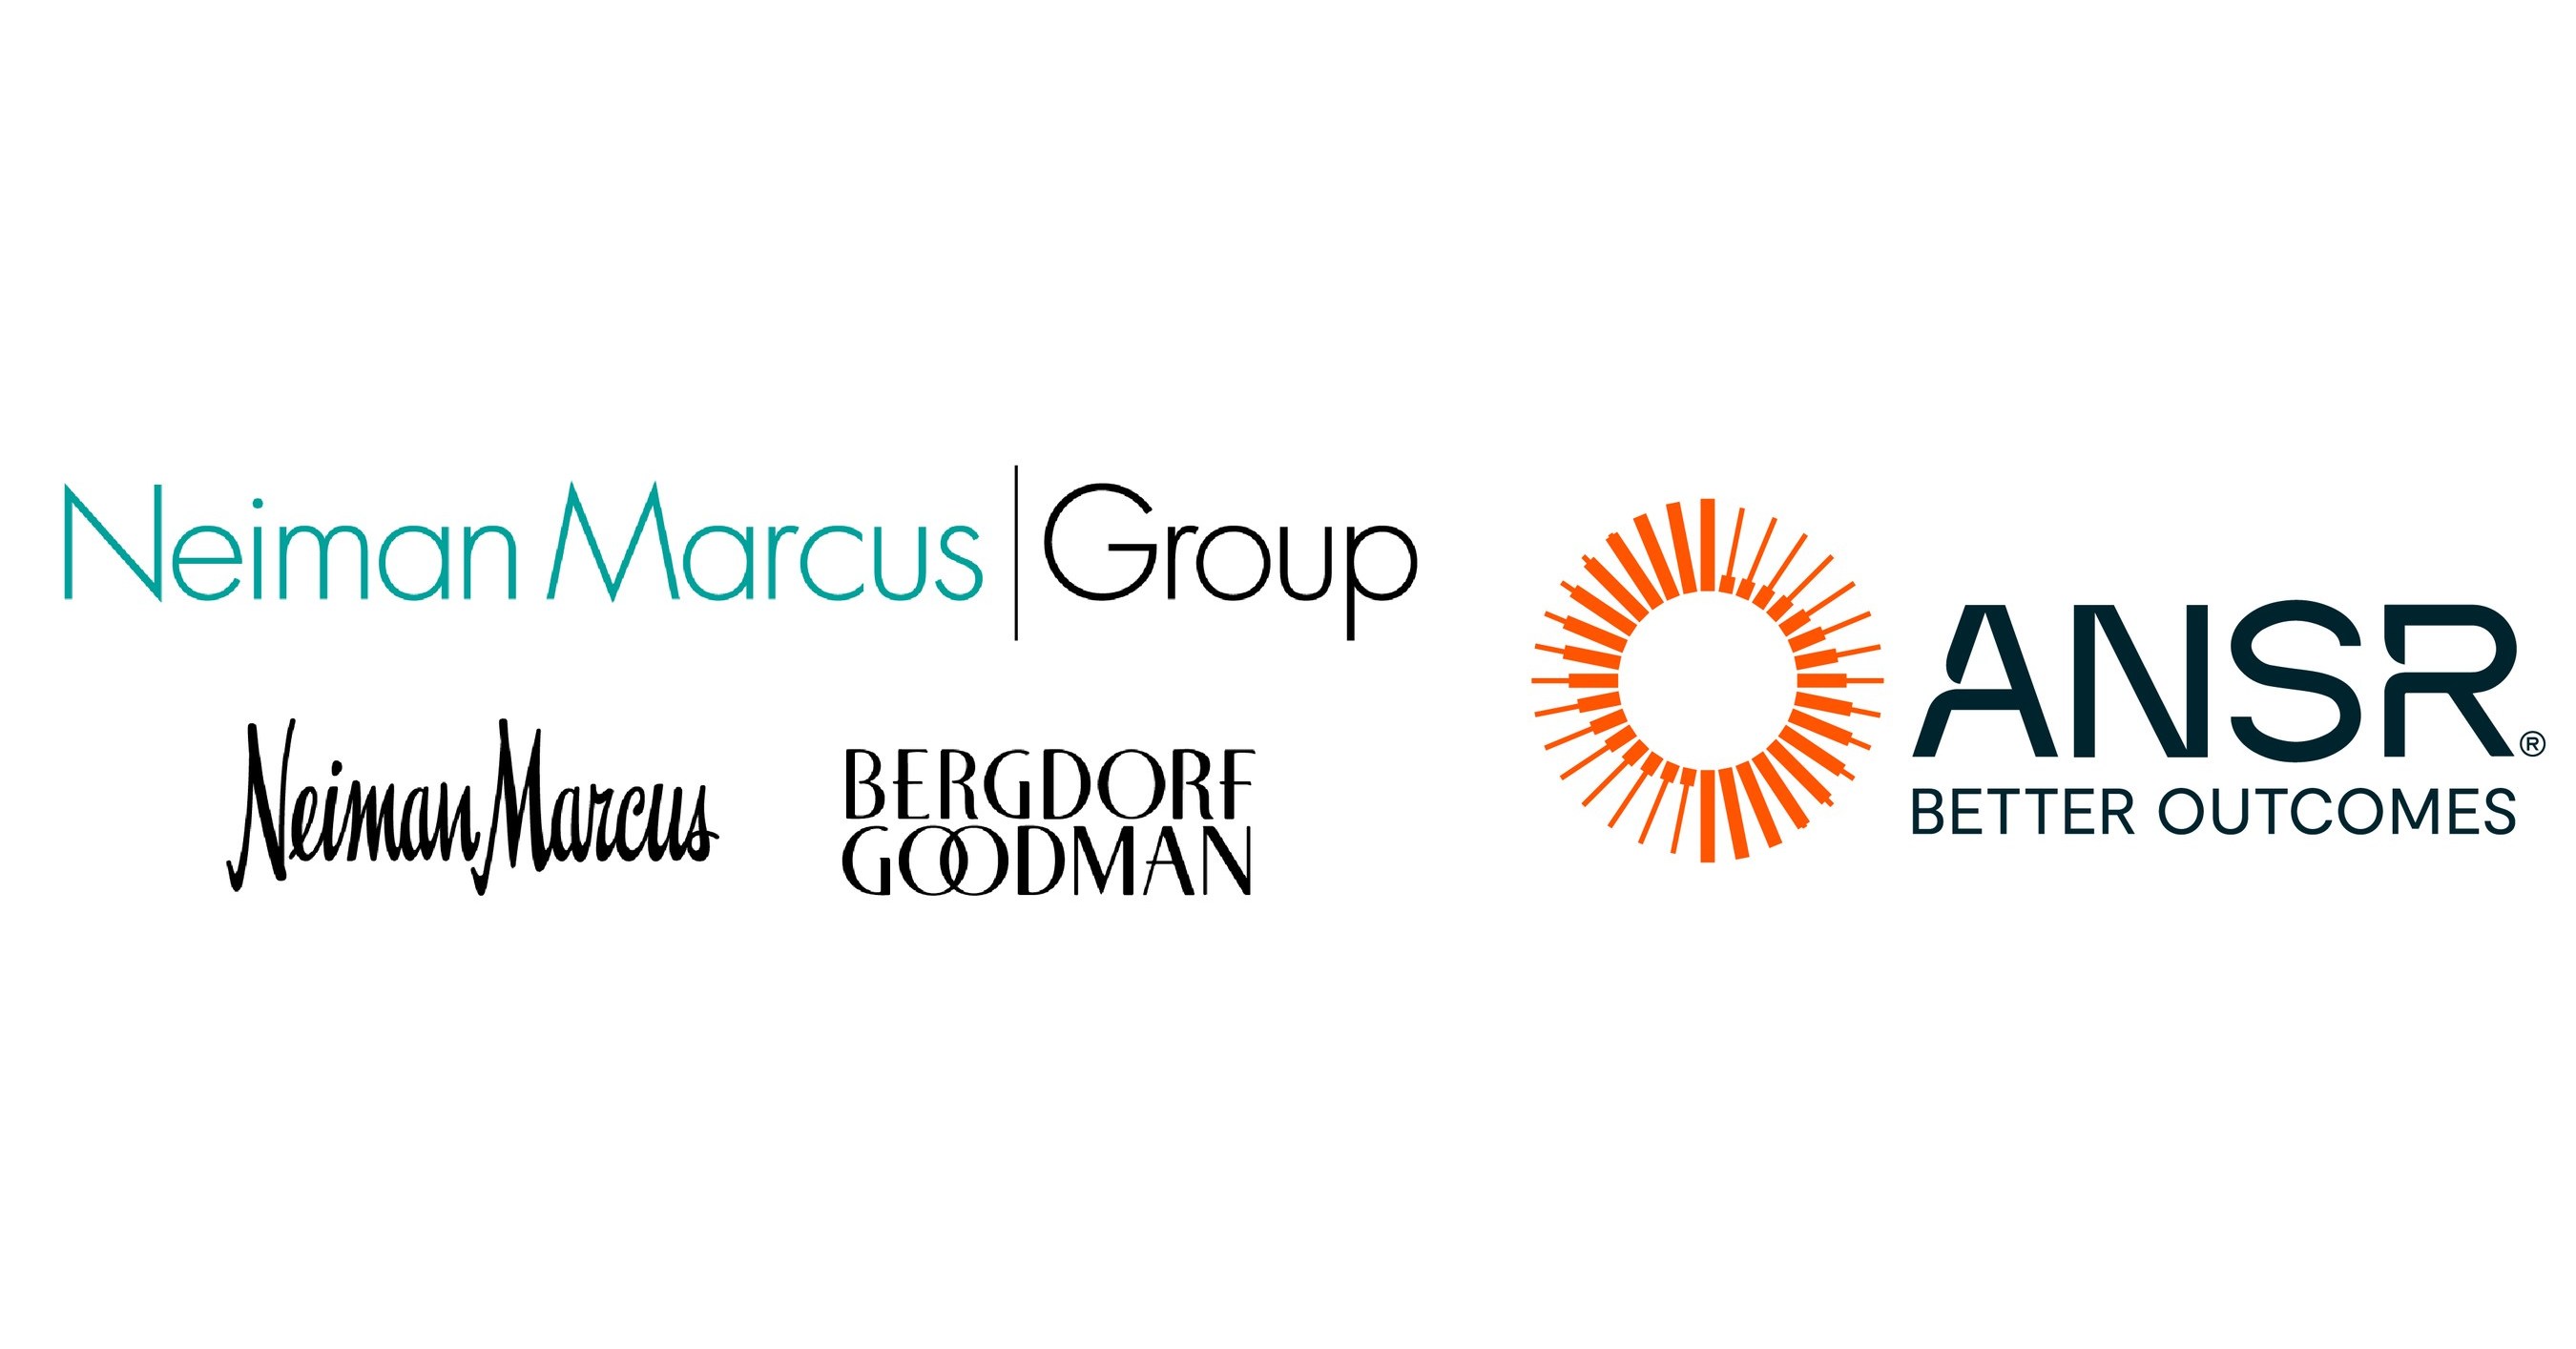 Neiman Marcus Group LTD LLC Company Profile - Overview - GlobalData